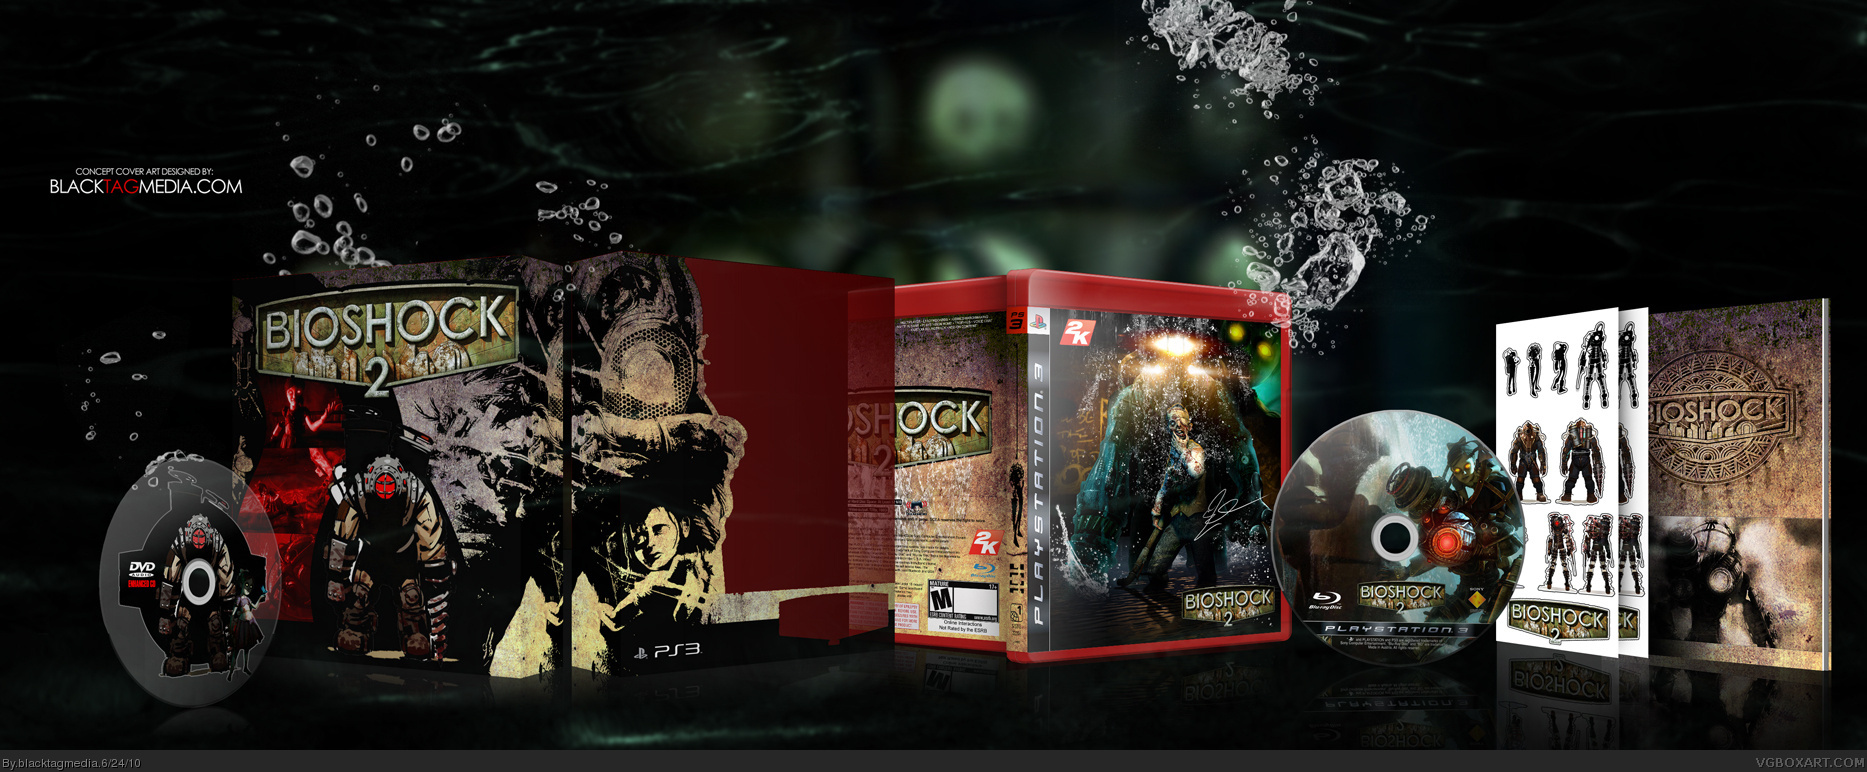 Bioshock 2: Signed Artbox Collectors Edition box cover